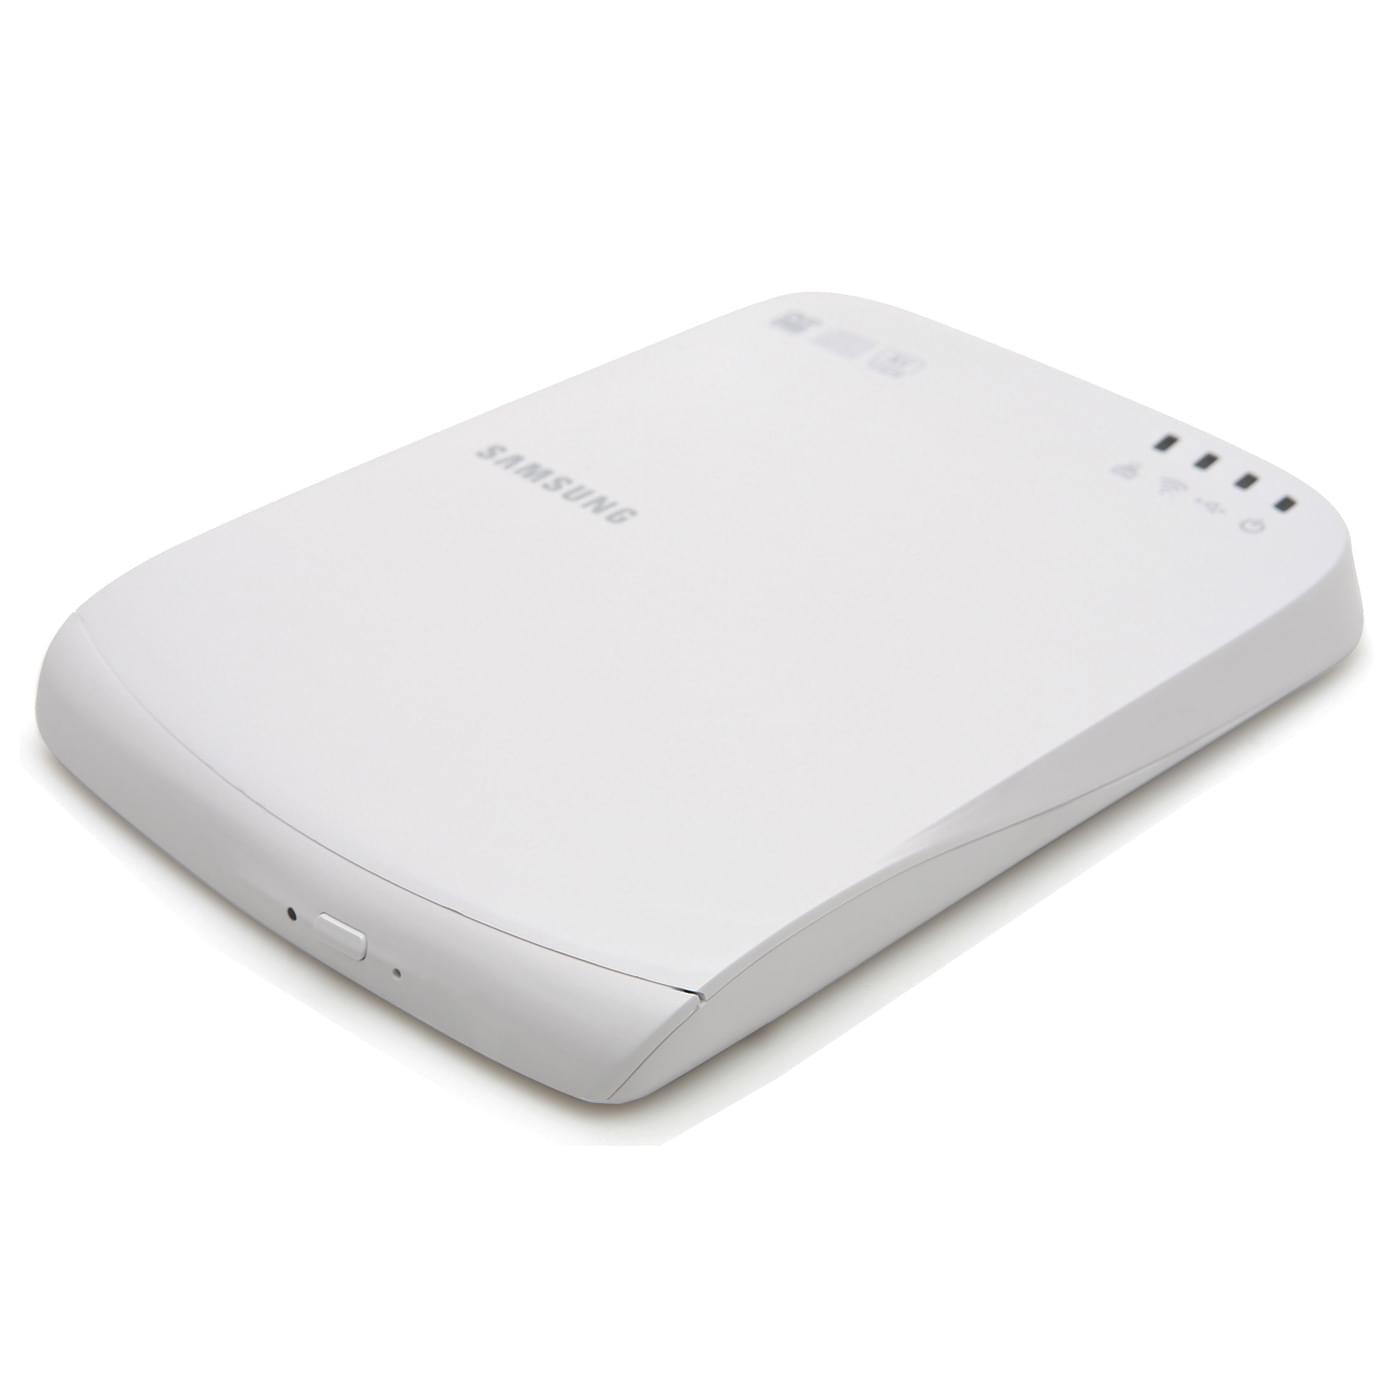 Graveur Samsung SE-208BW Externe Slim WiFi Blanc DVD+/-RW 8X DL